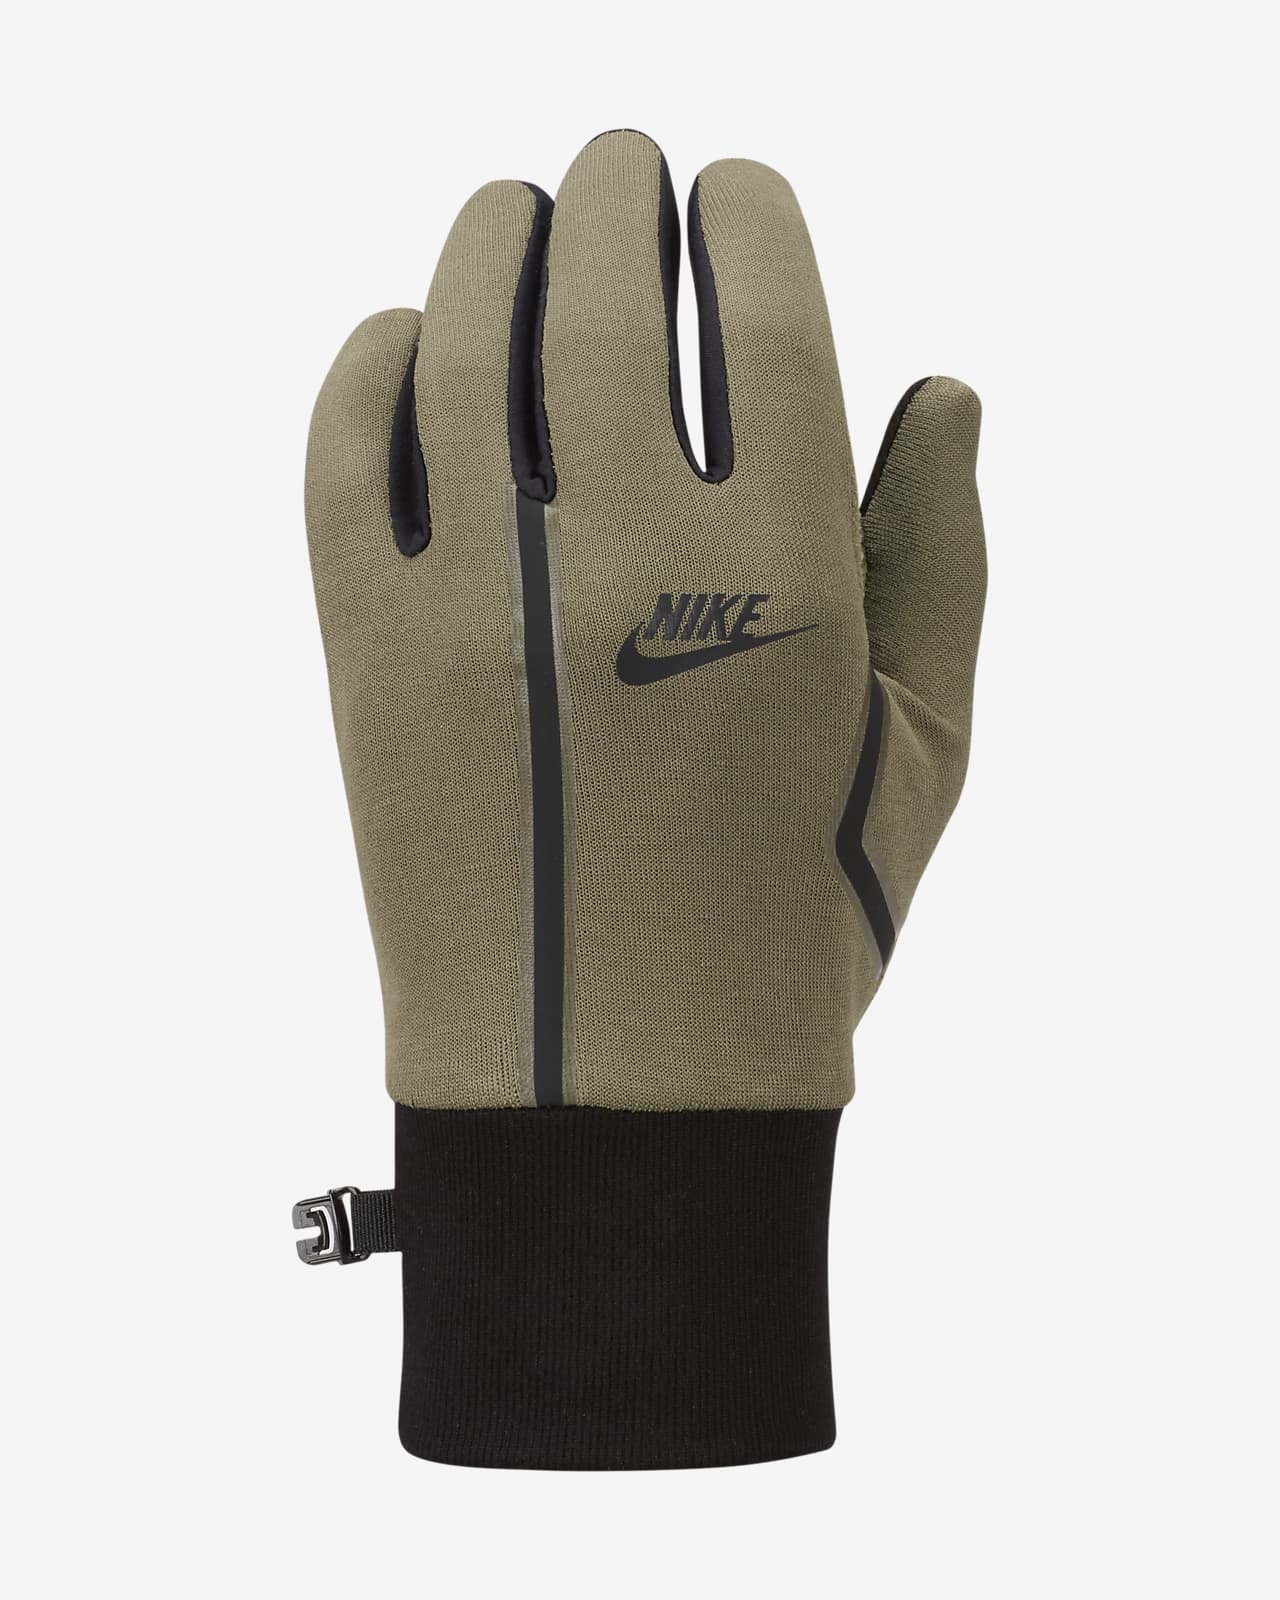 nike tech fleece gloves grey